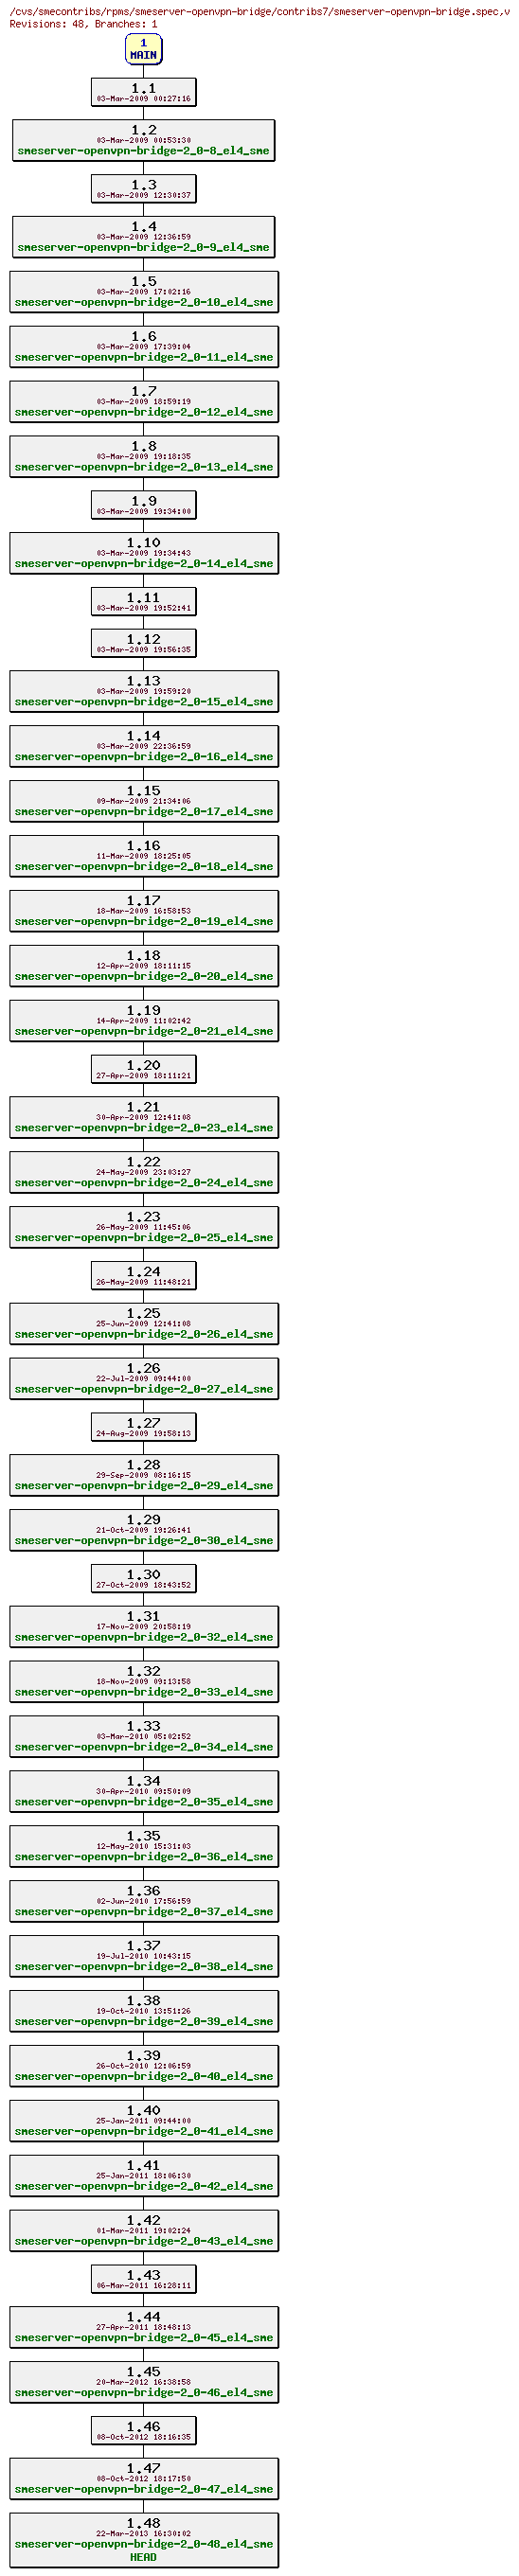 Revisions of rpms/smeserver-openvpn-bridge/contribs7/smeserver-openvpn-bridge.spec